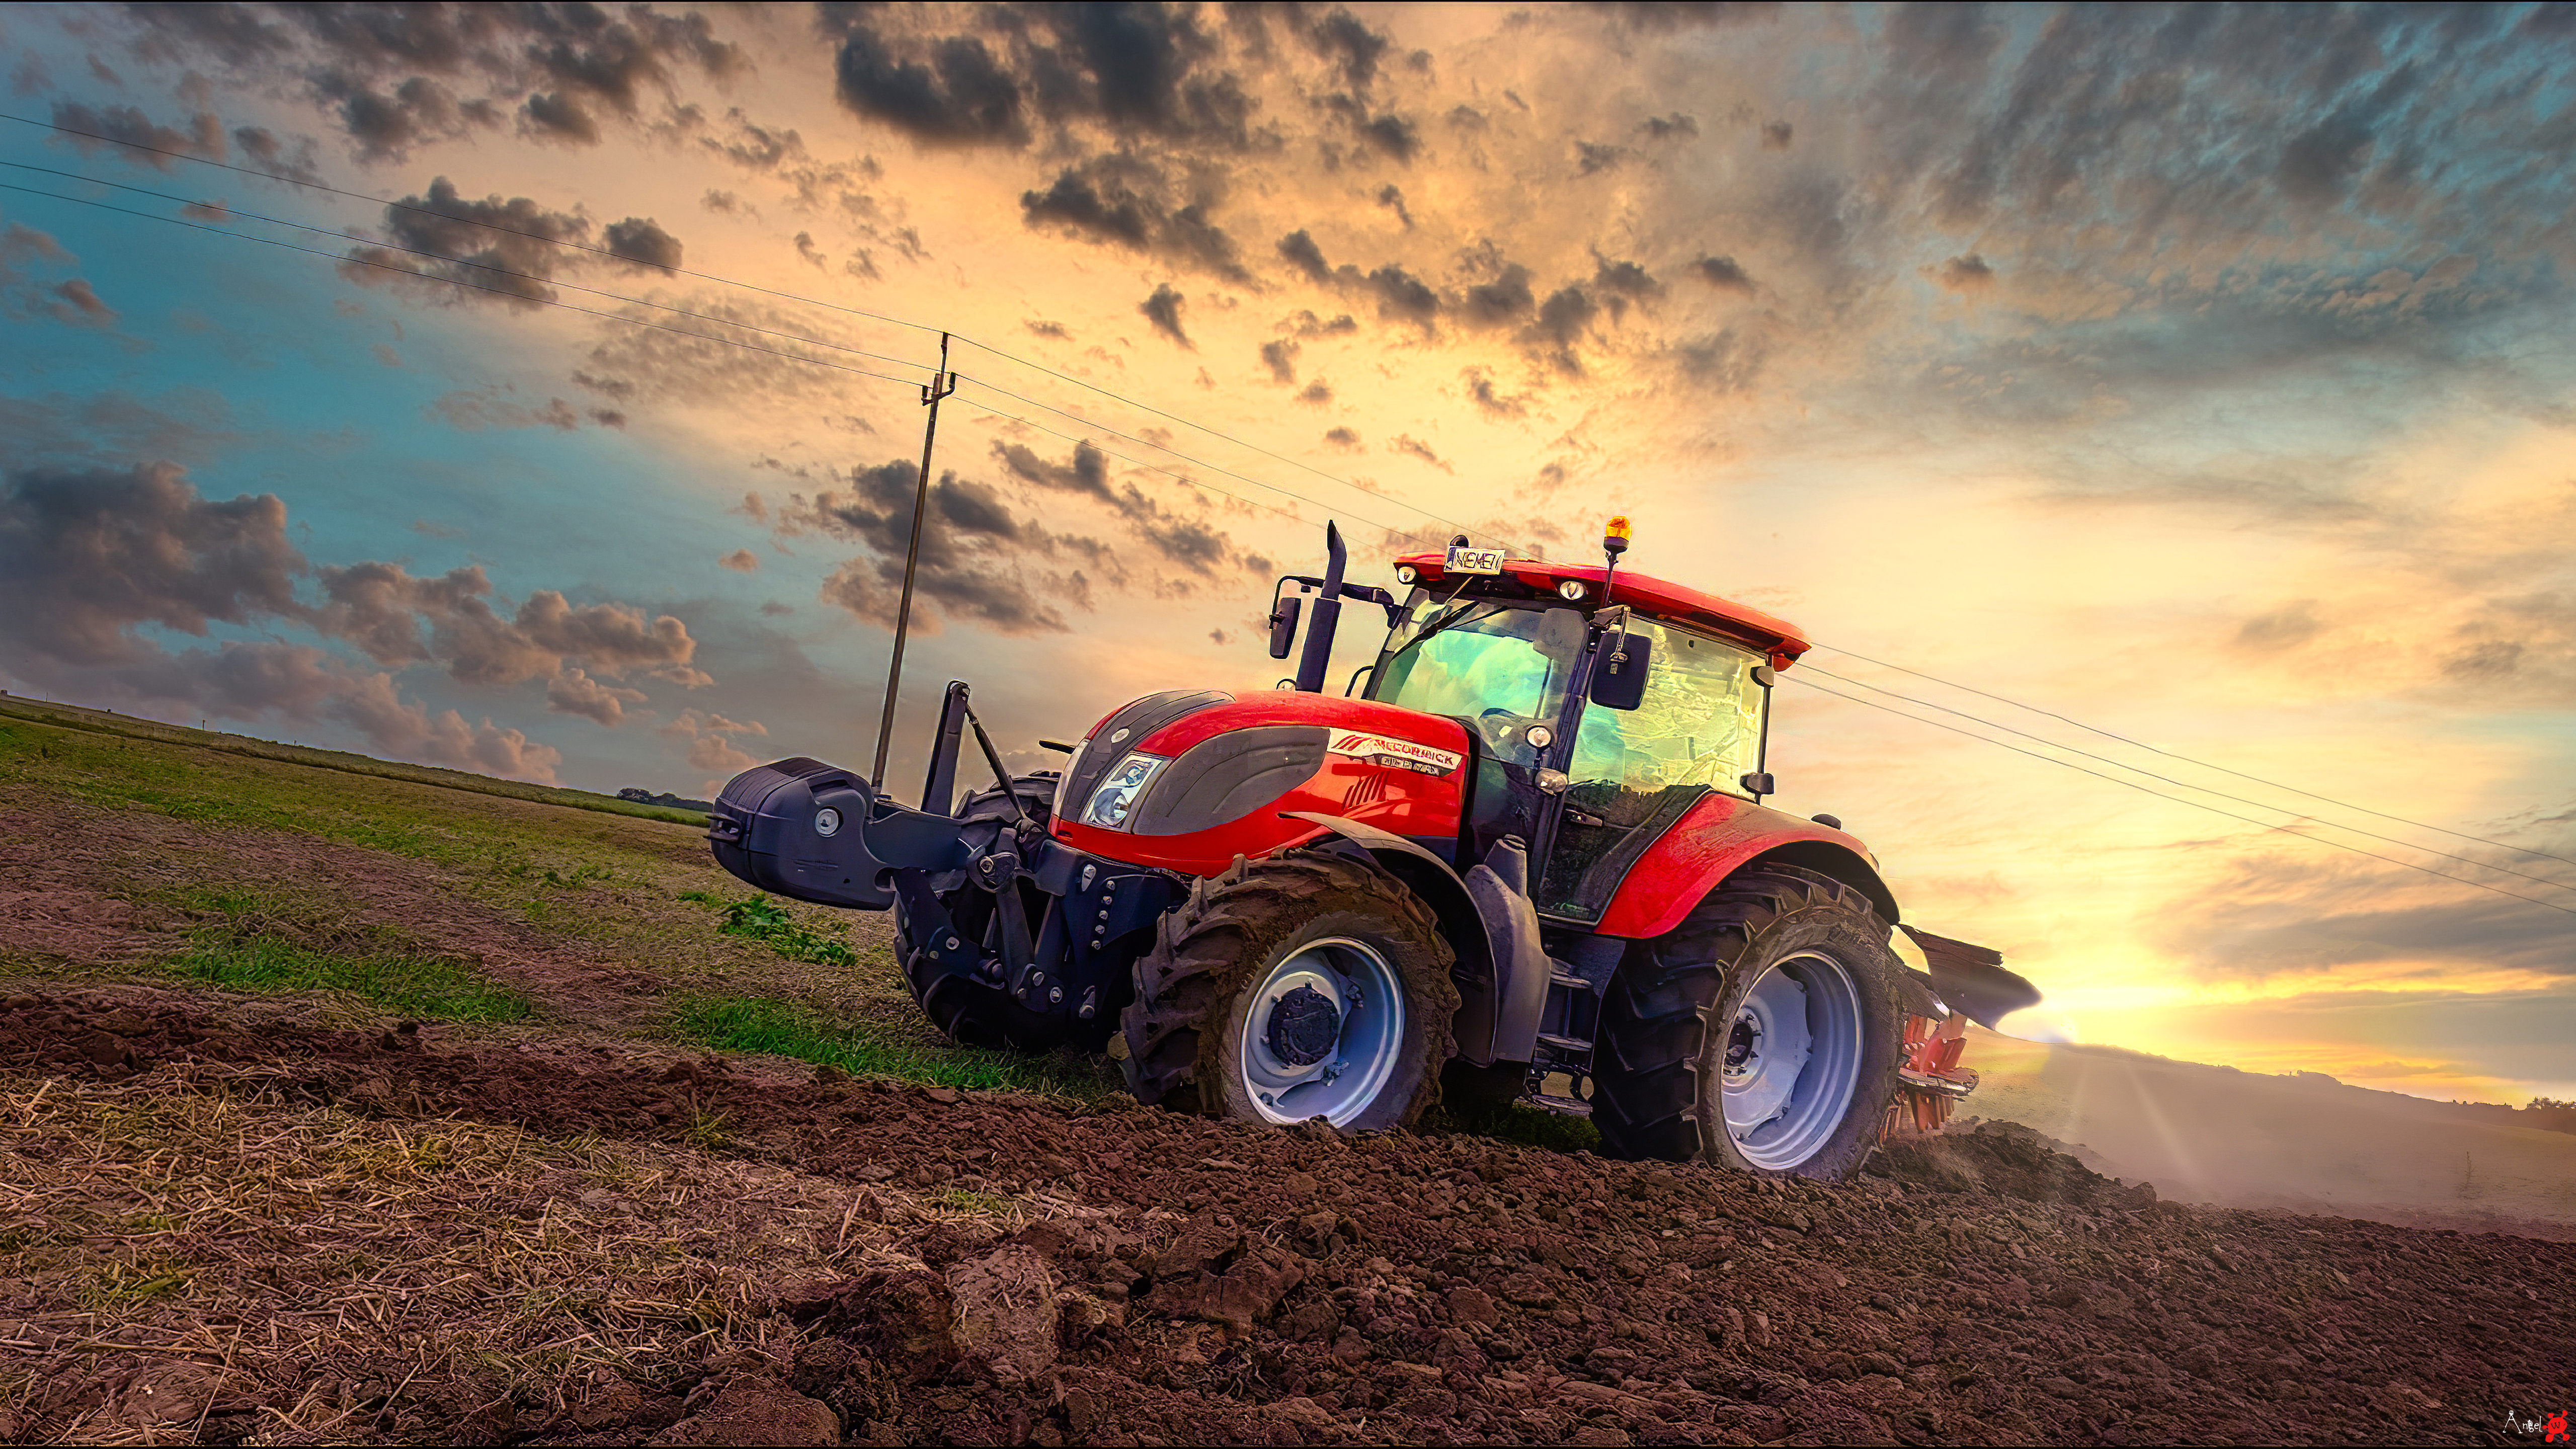 Tractors Sunset Field Vibrant Photoshop Edit 5120x2880